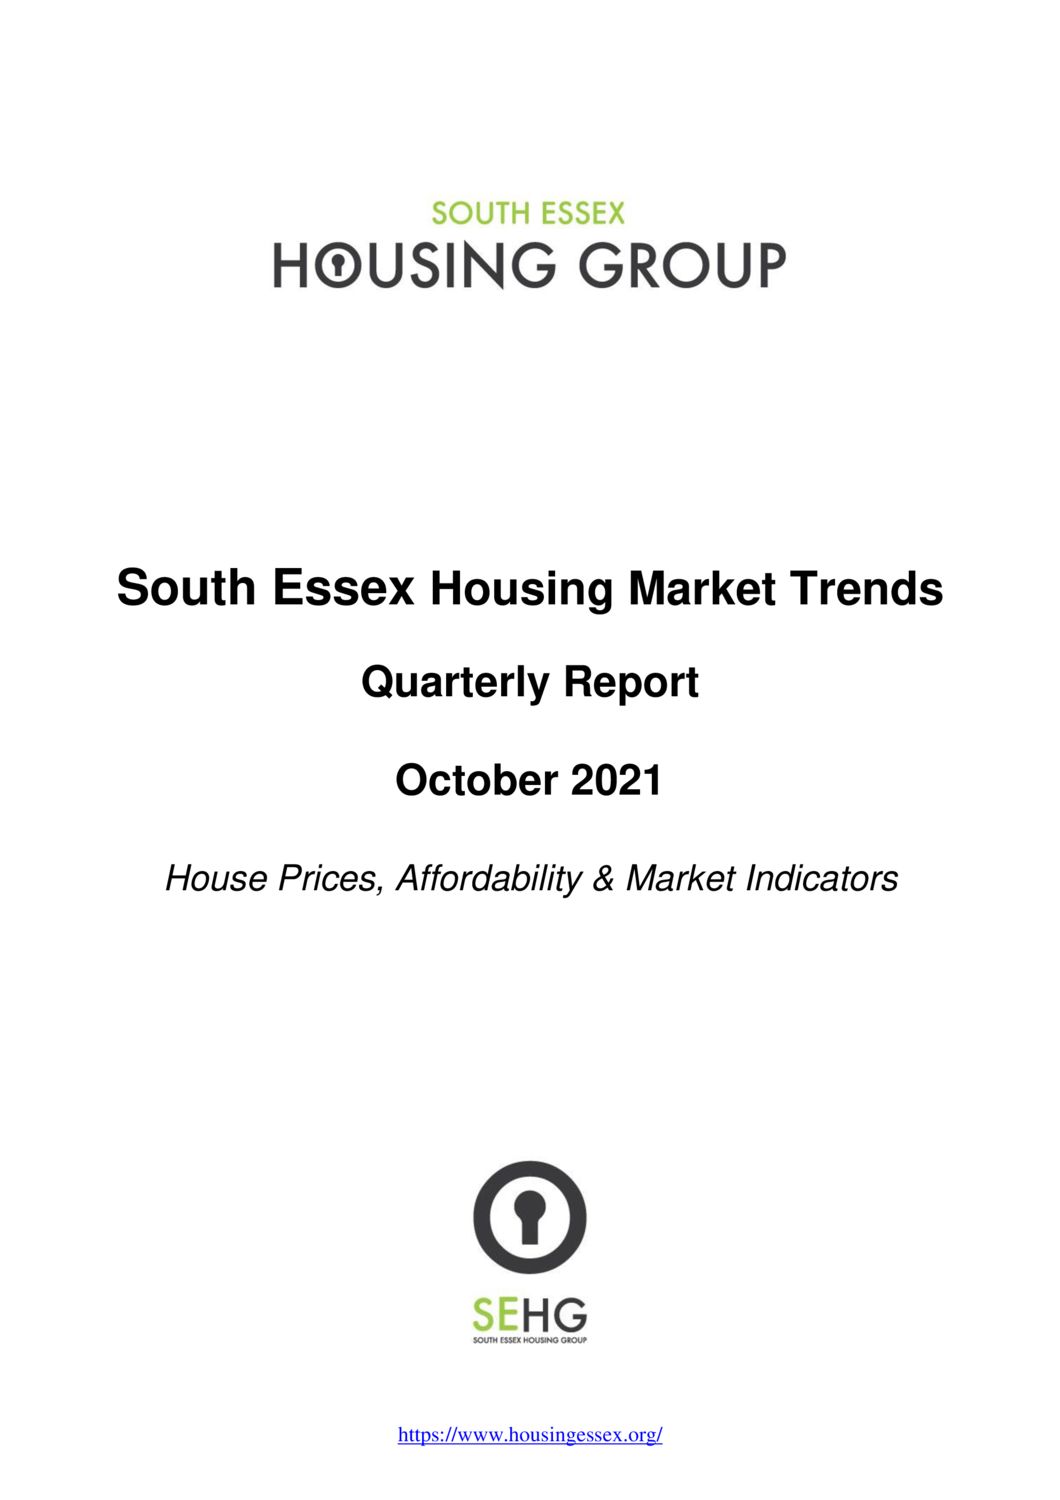 South Essex Housing Market Trends Report October 2021